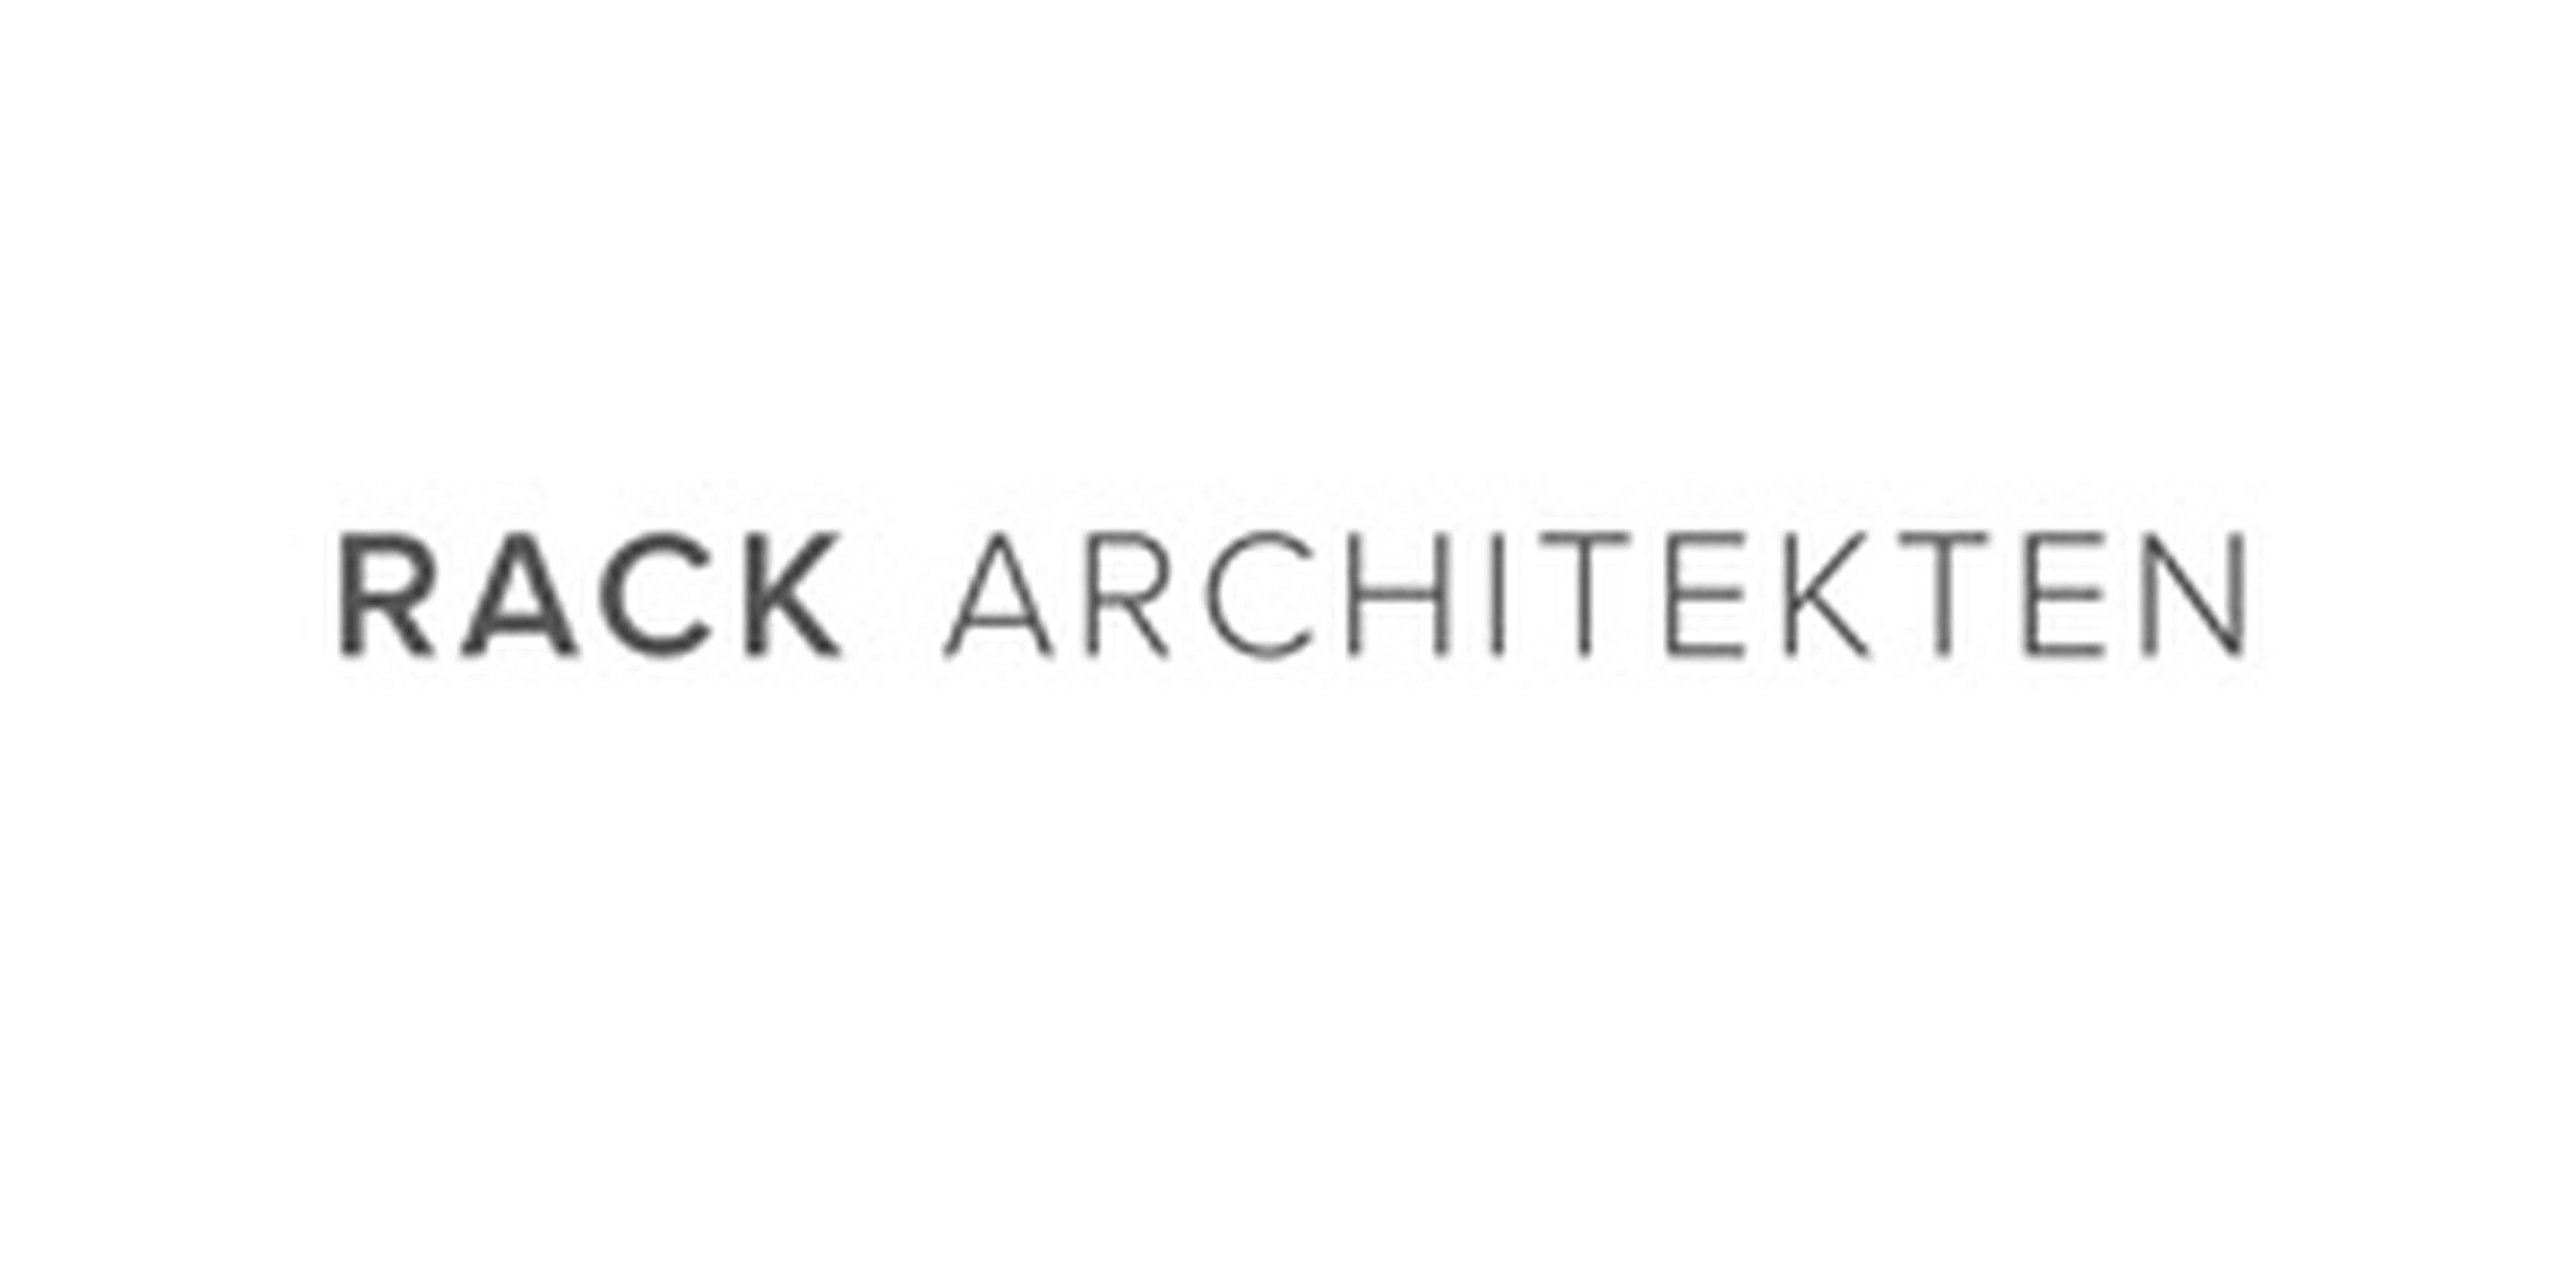 Rack Architekten